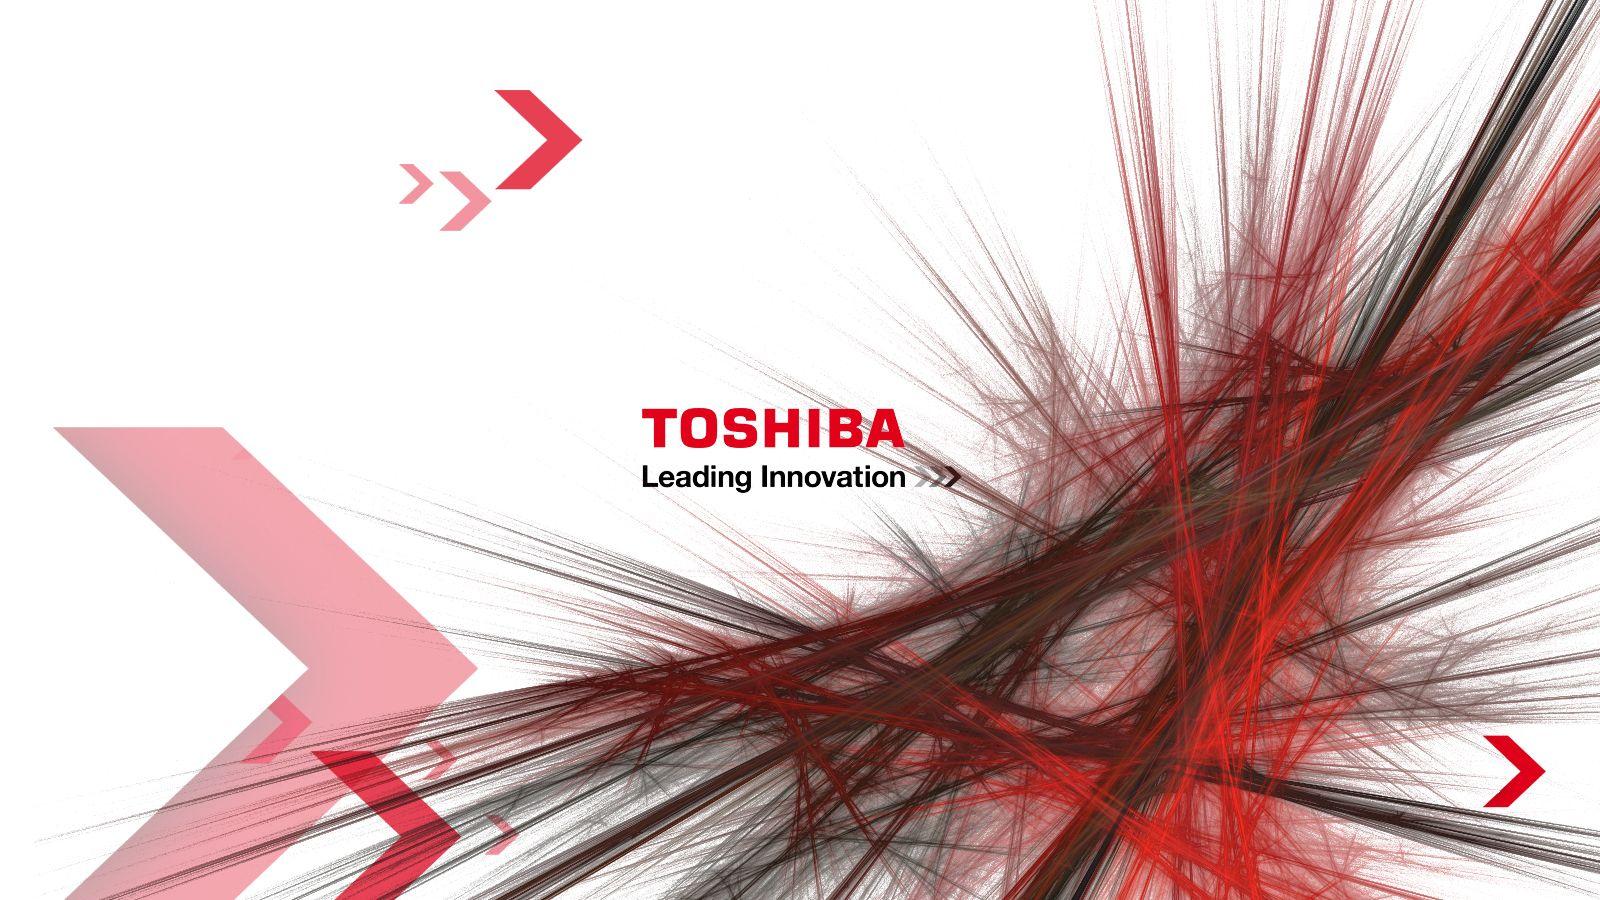 Toshiba Wallpaper, HDQ Beautiful Toshiba Image & Wallpaper